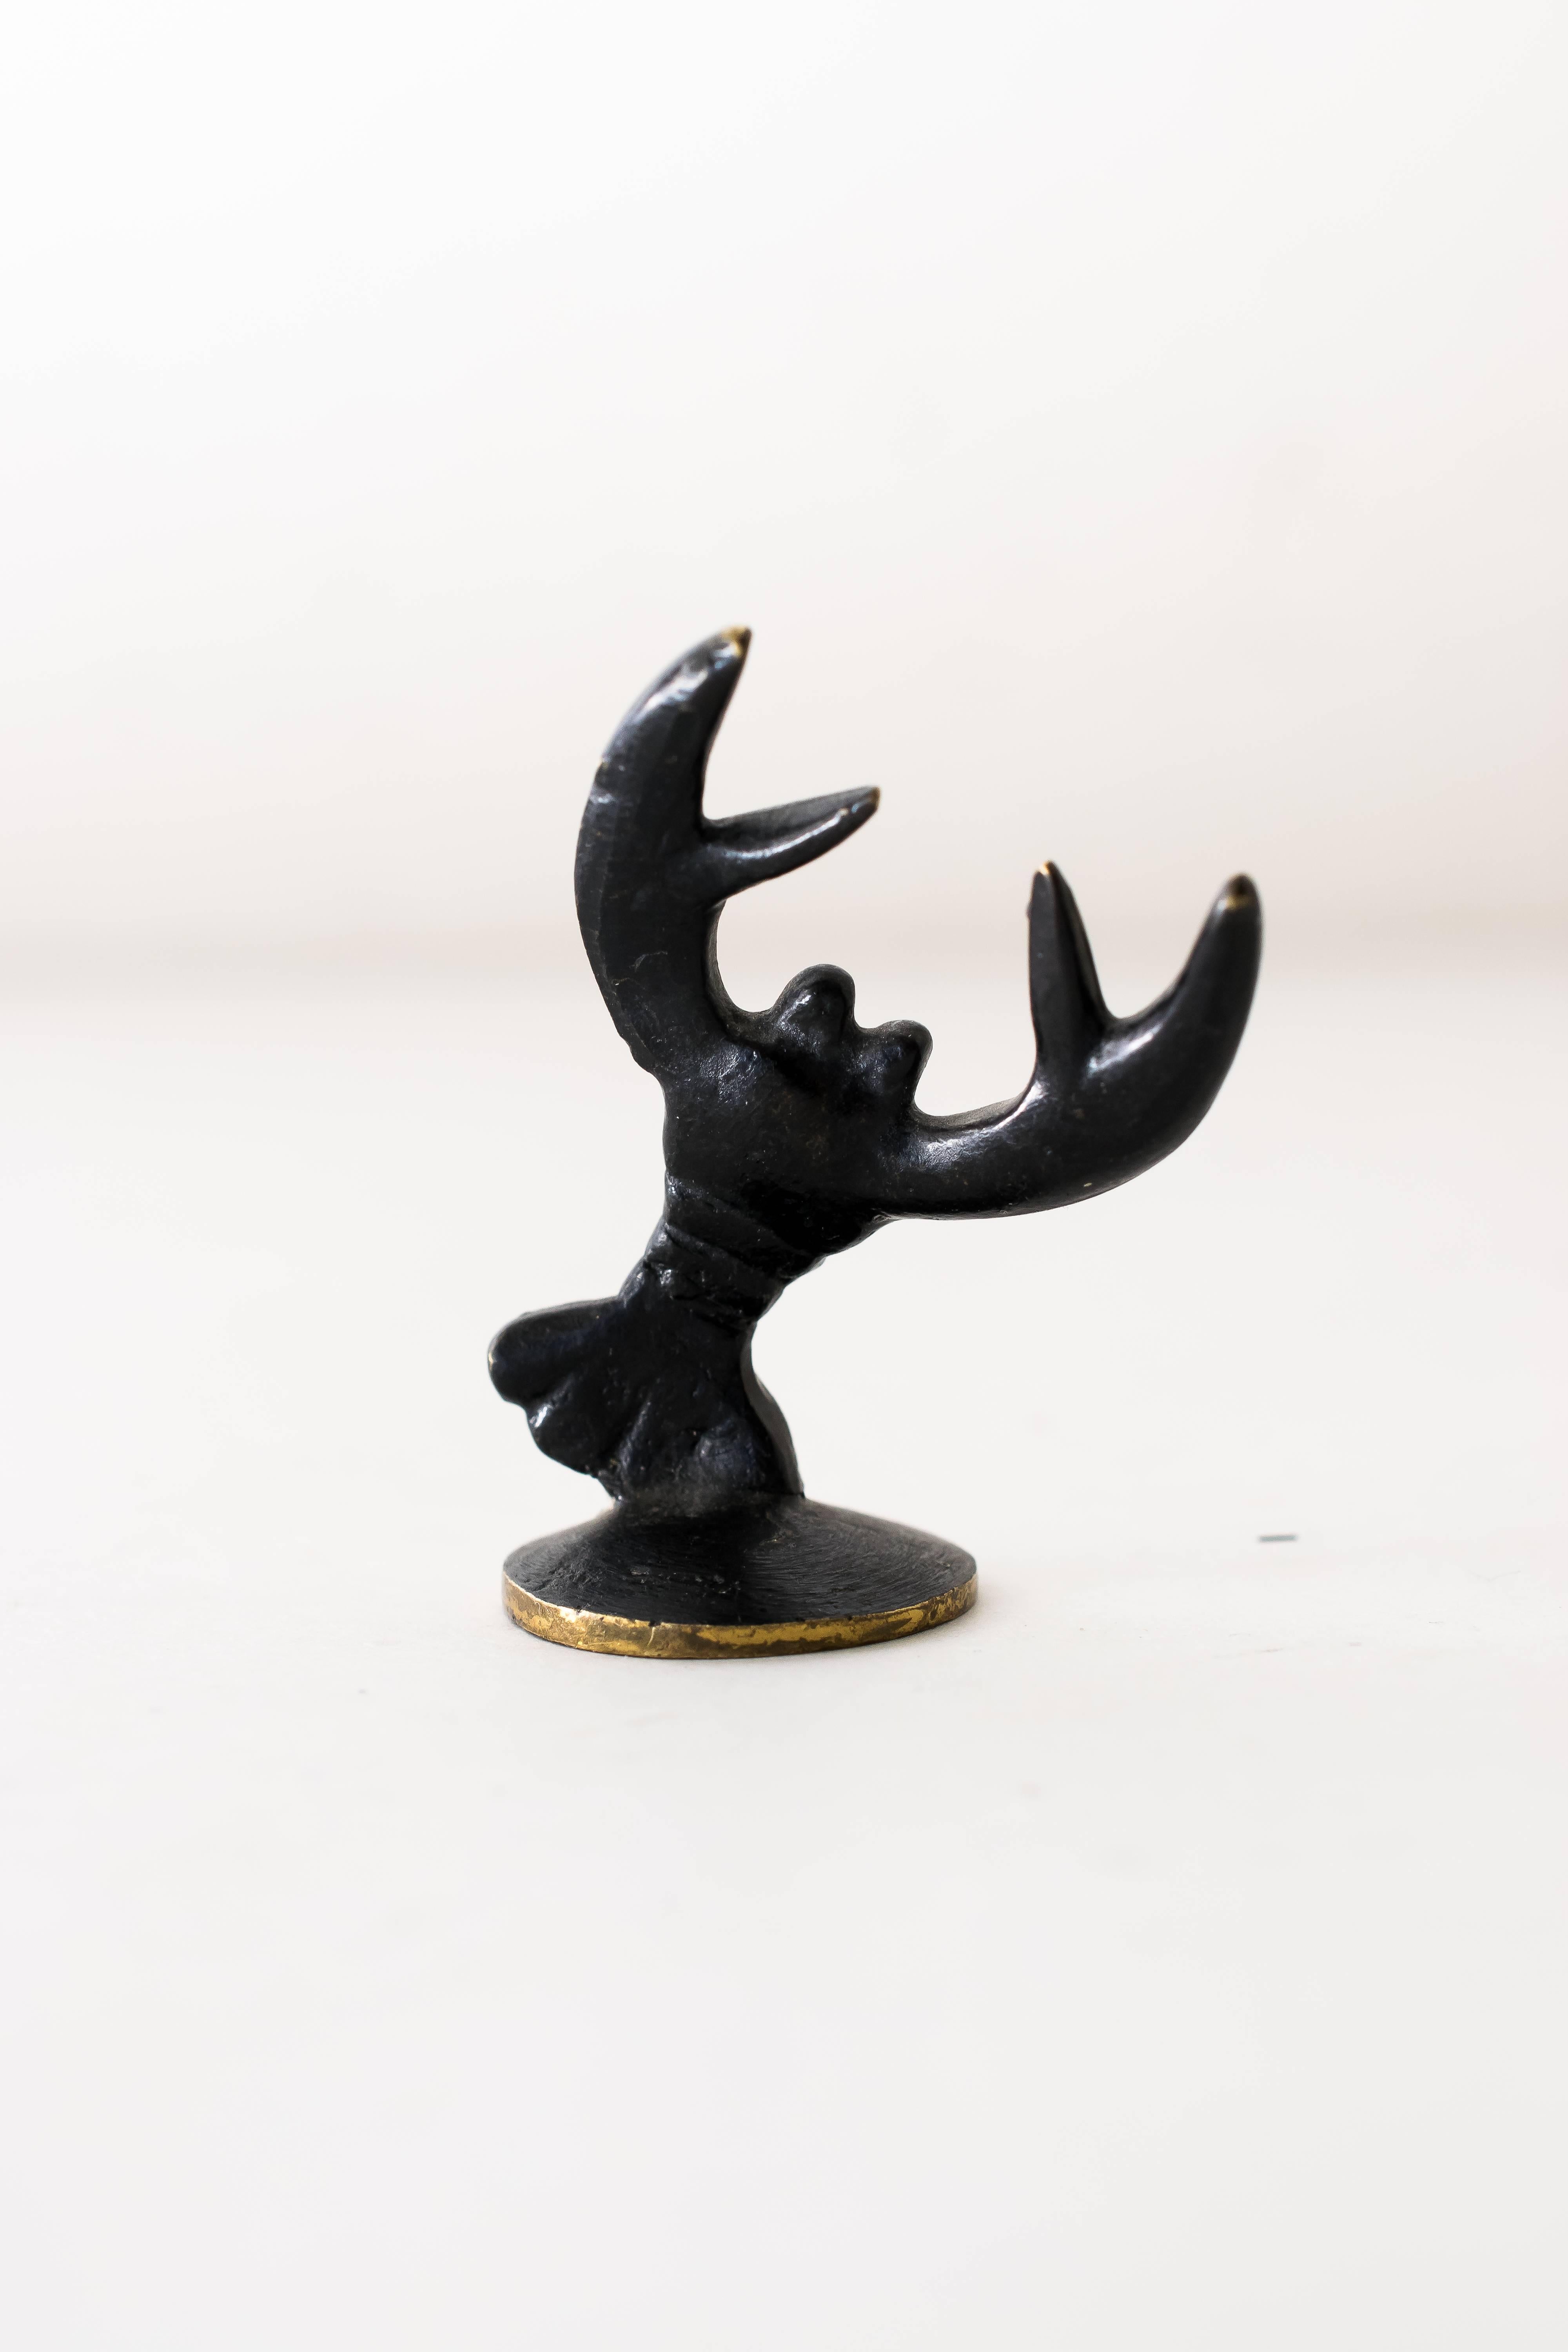 Walter Bosse cancer zodiac sign brass figurine, 1950s
Original condition.